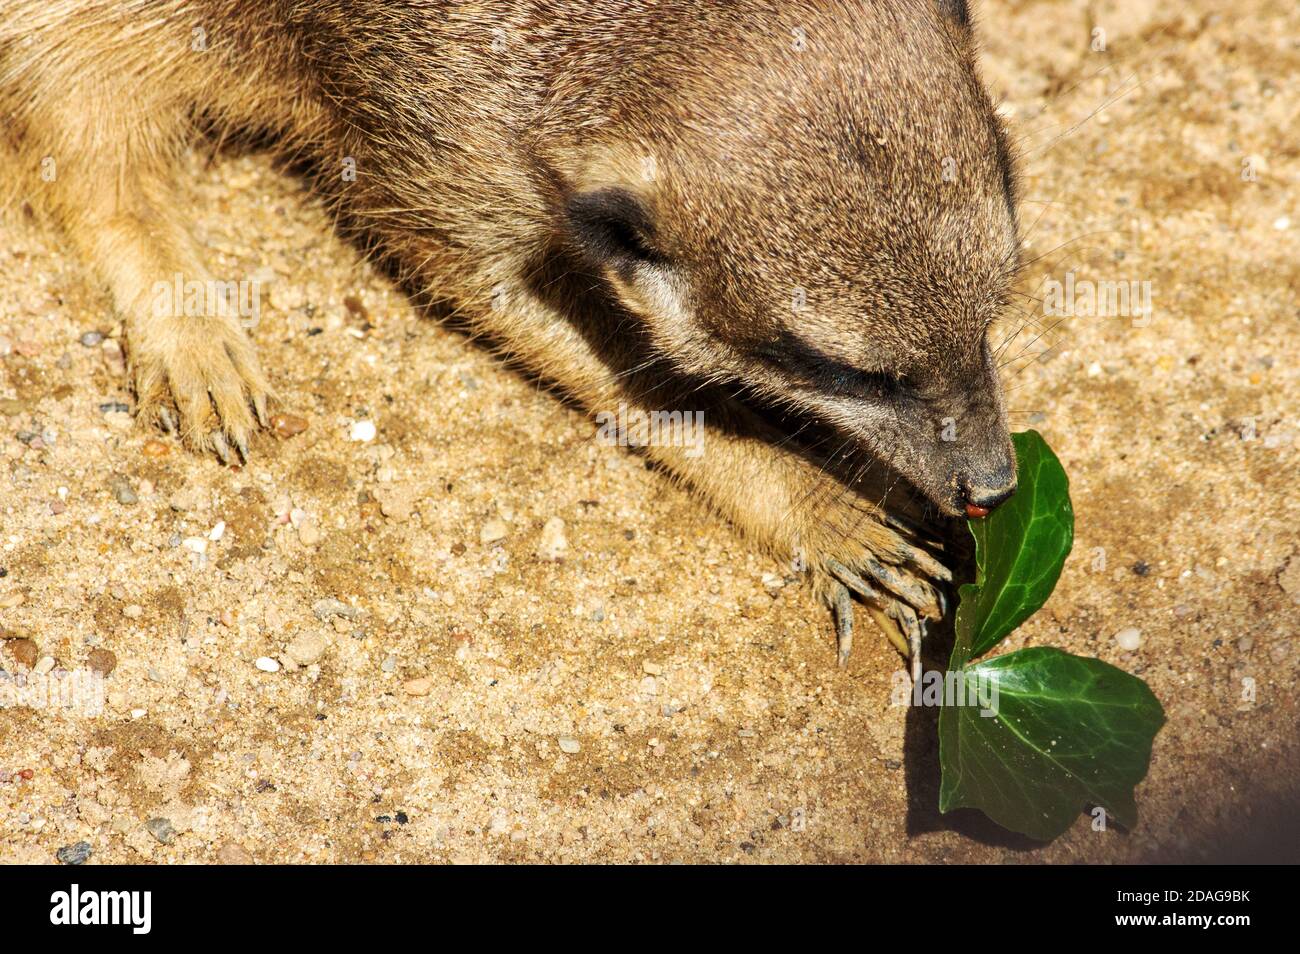 Image of a meerkat curiously examining a leaf, Suricata suricatta Stock Photo